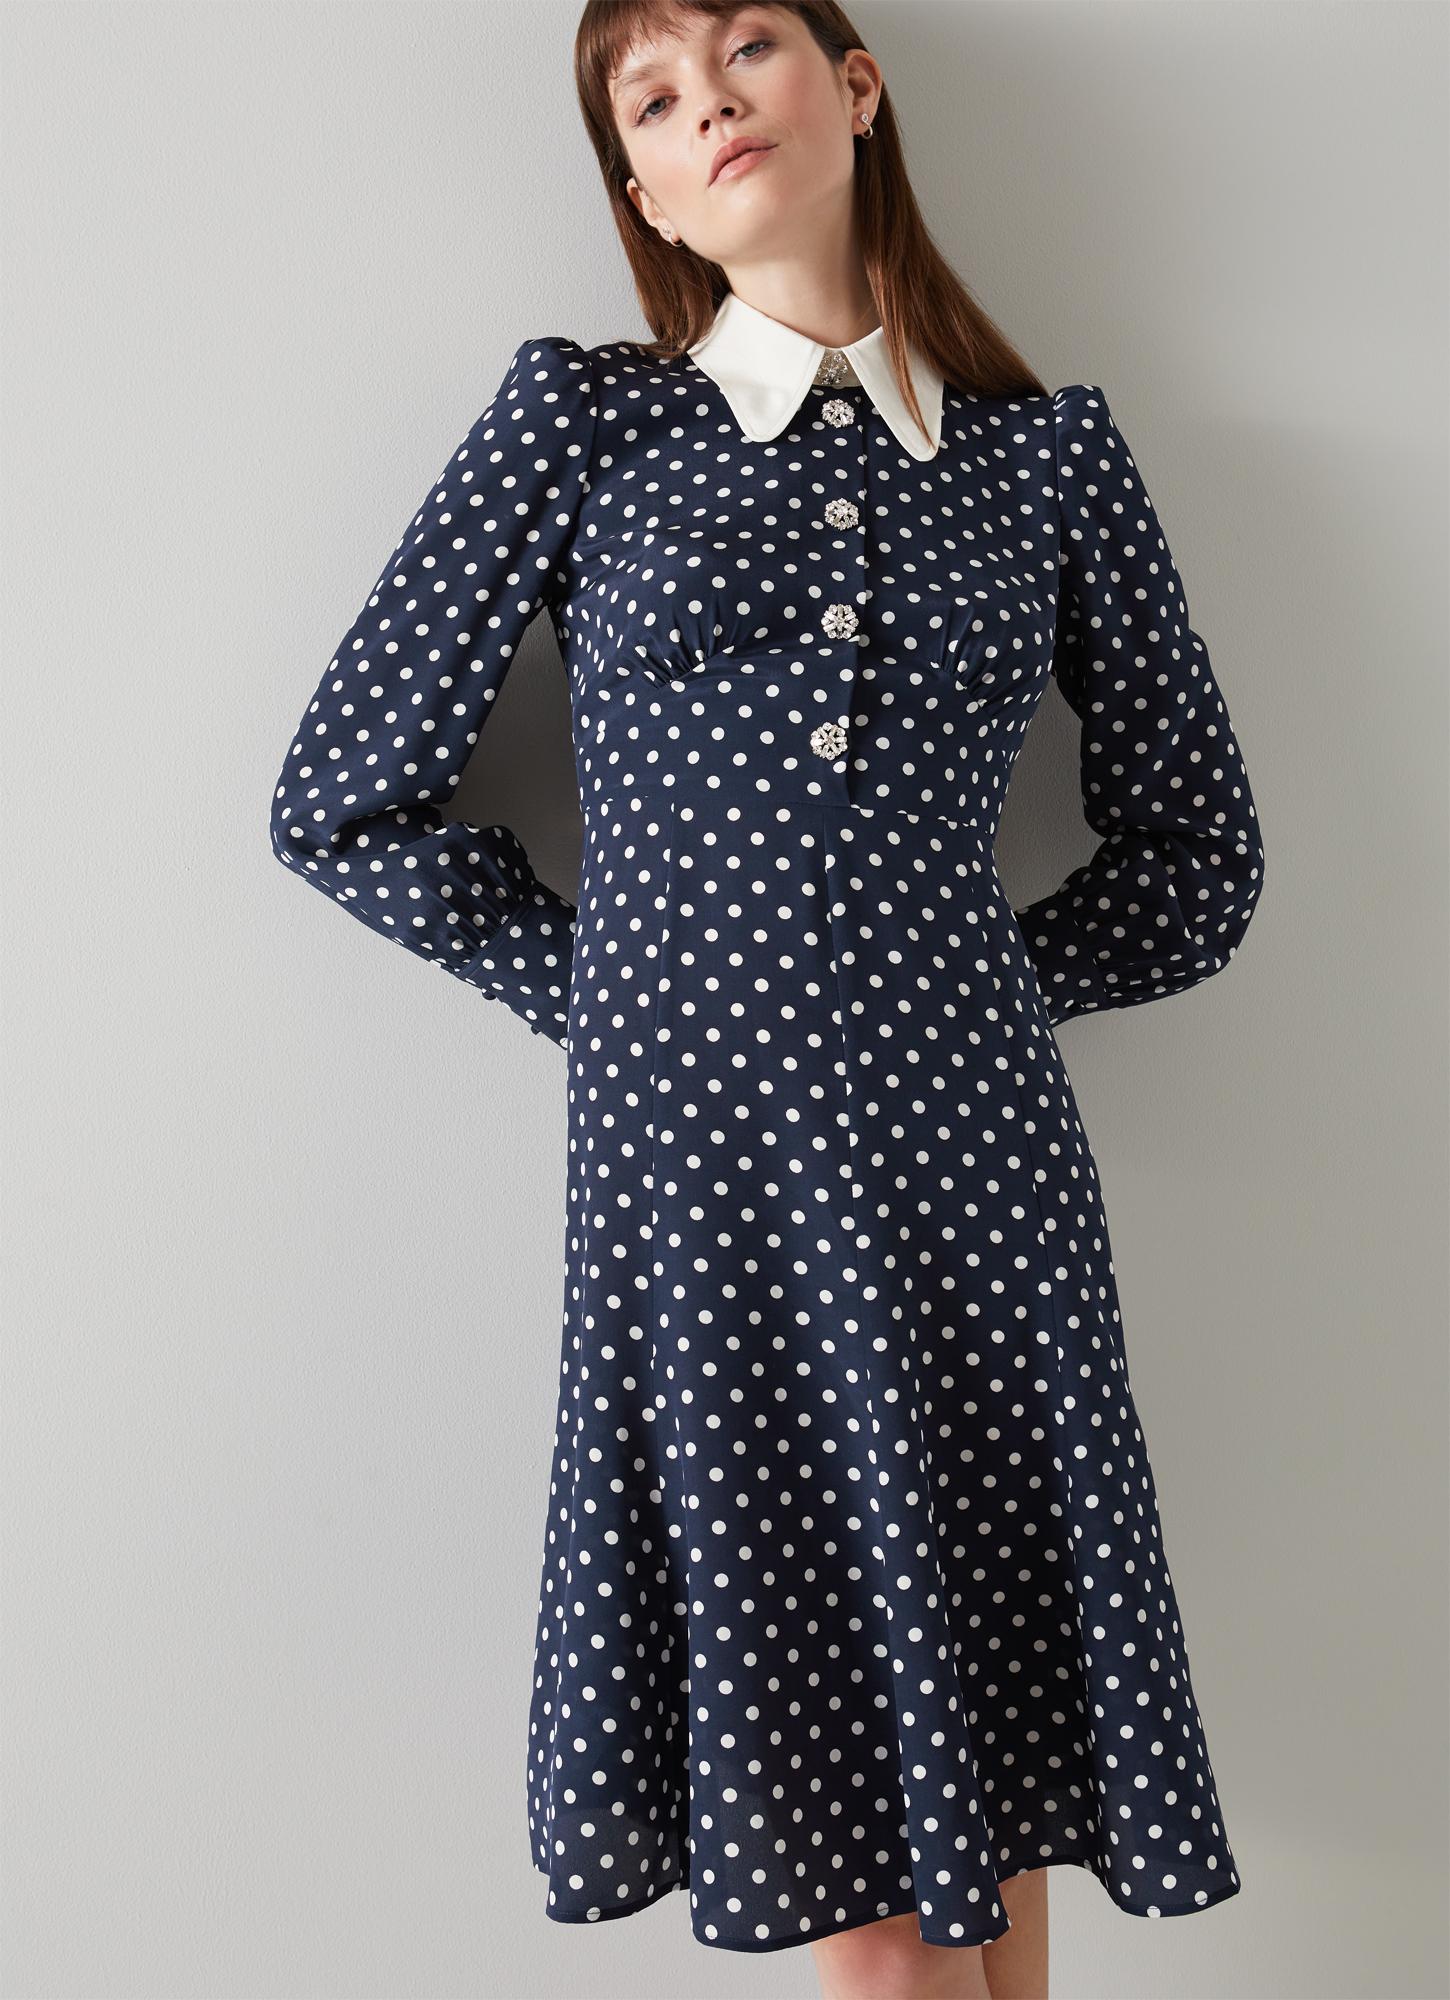 L.K.Bennett Mathilde Navy & Cream Polka Dot Silk Tea Dress Navy Blue, Navy Blue